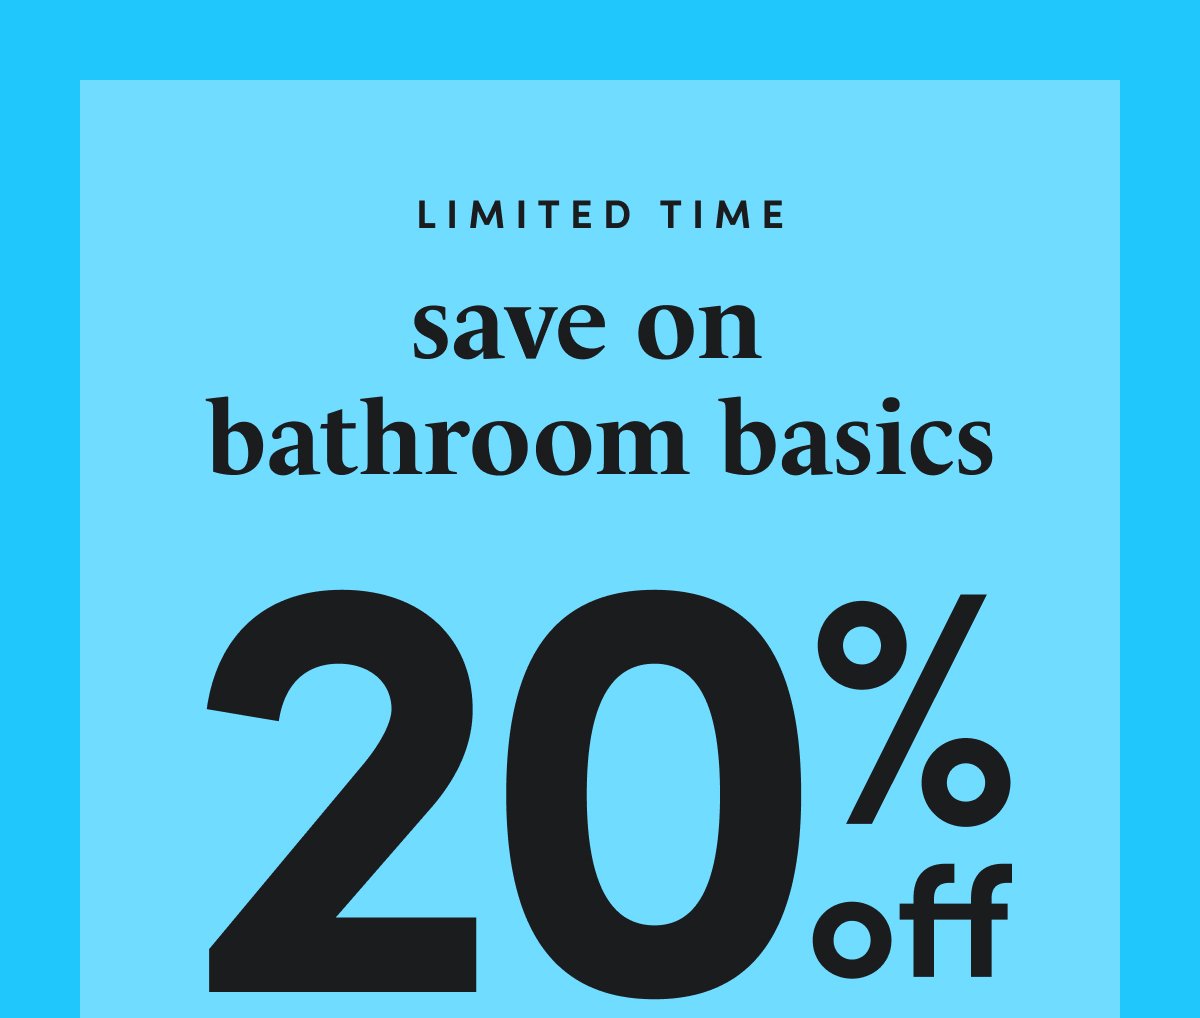 LIMITED TIME save on bathroom basics 20% off